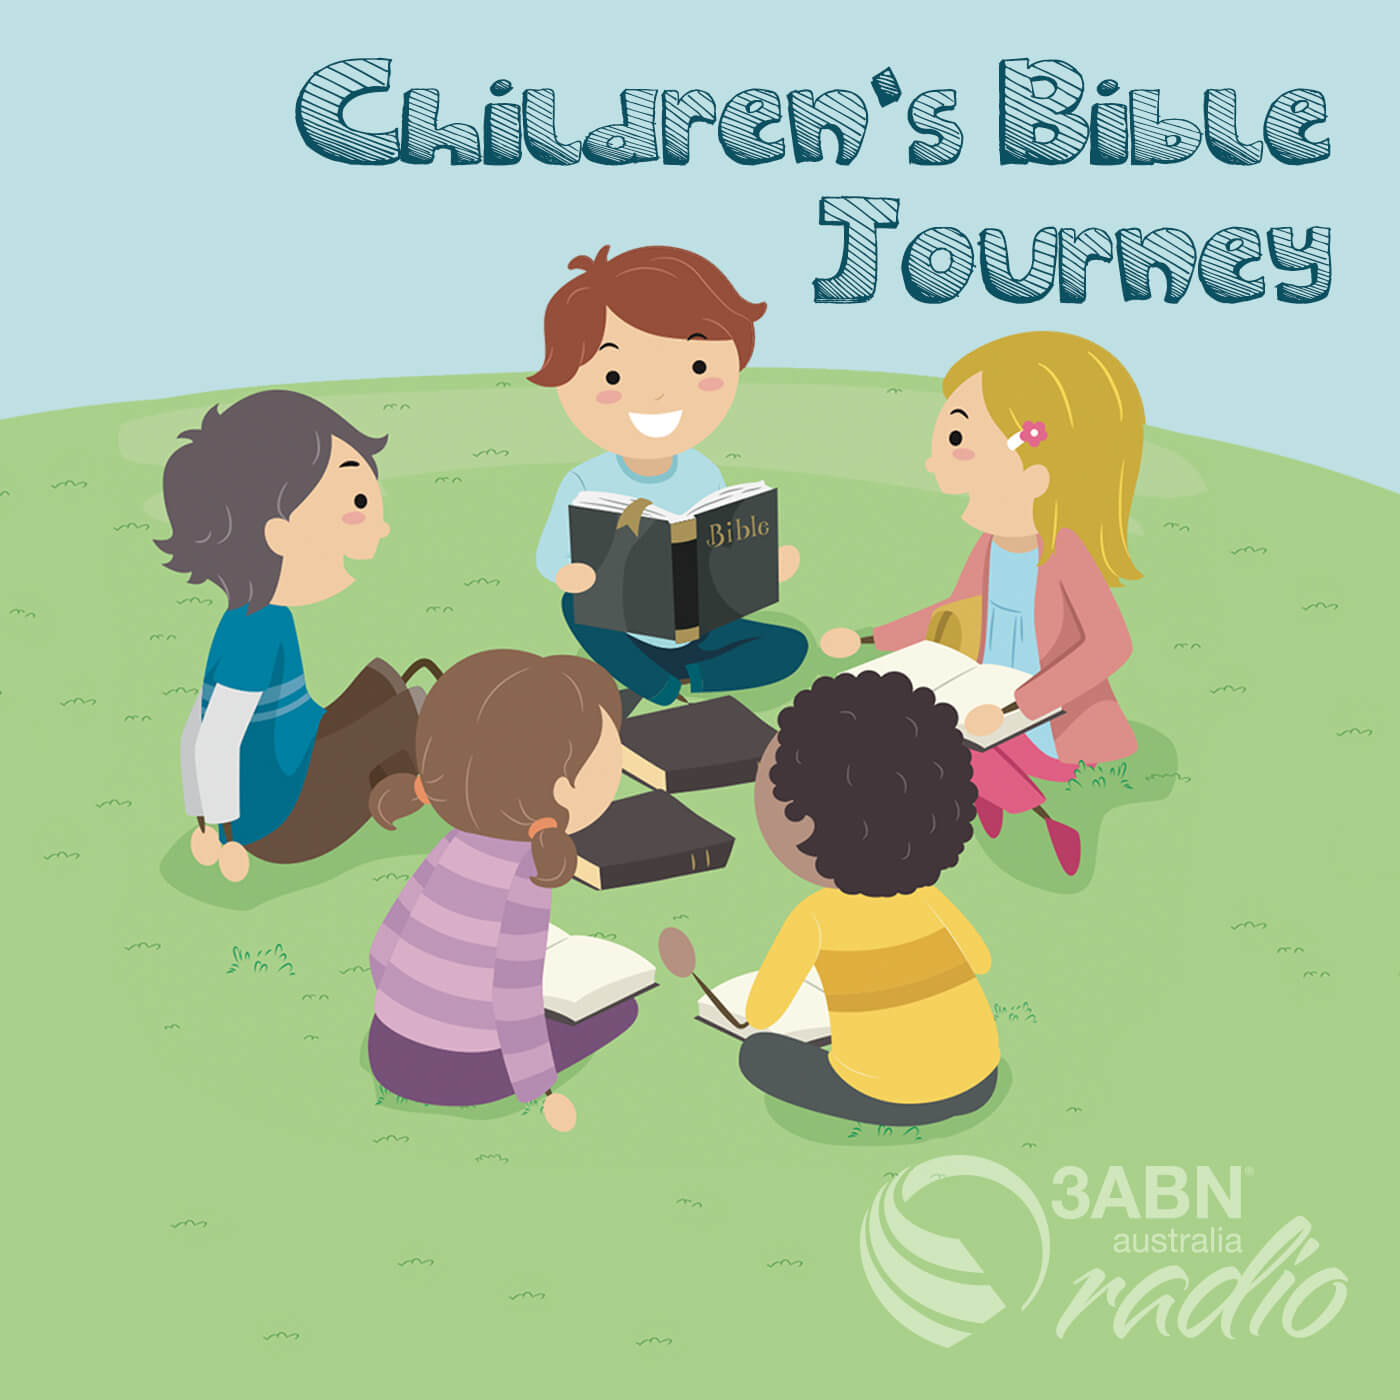 Children's Bible Journey - 2148